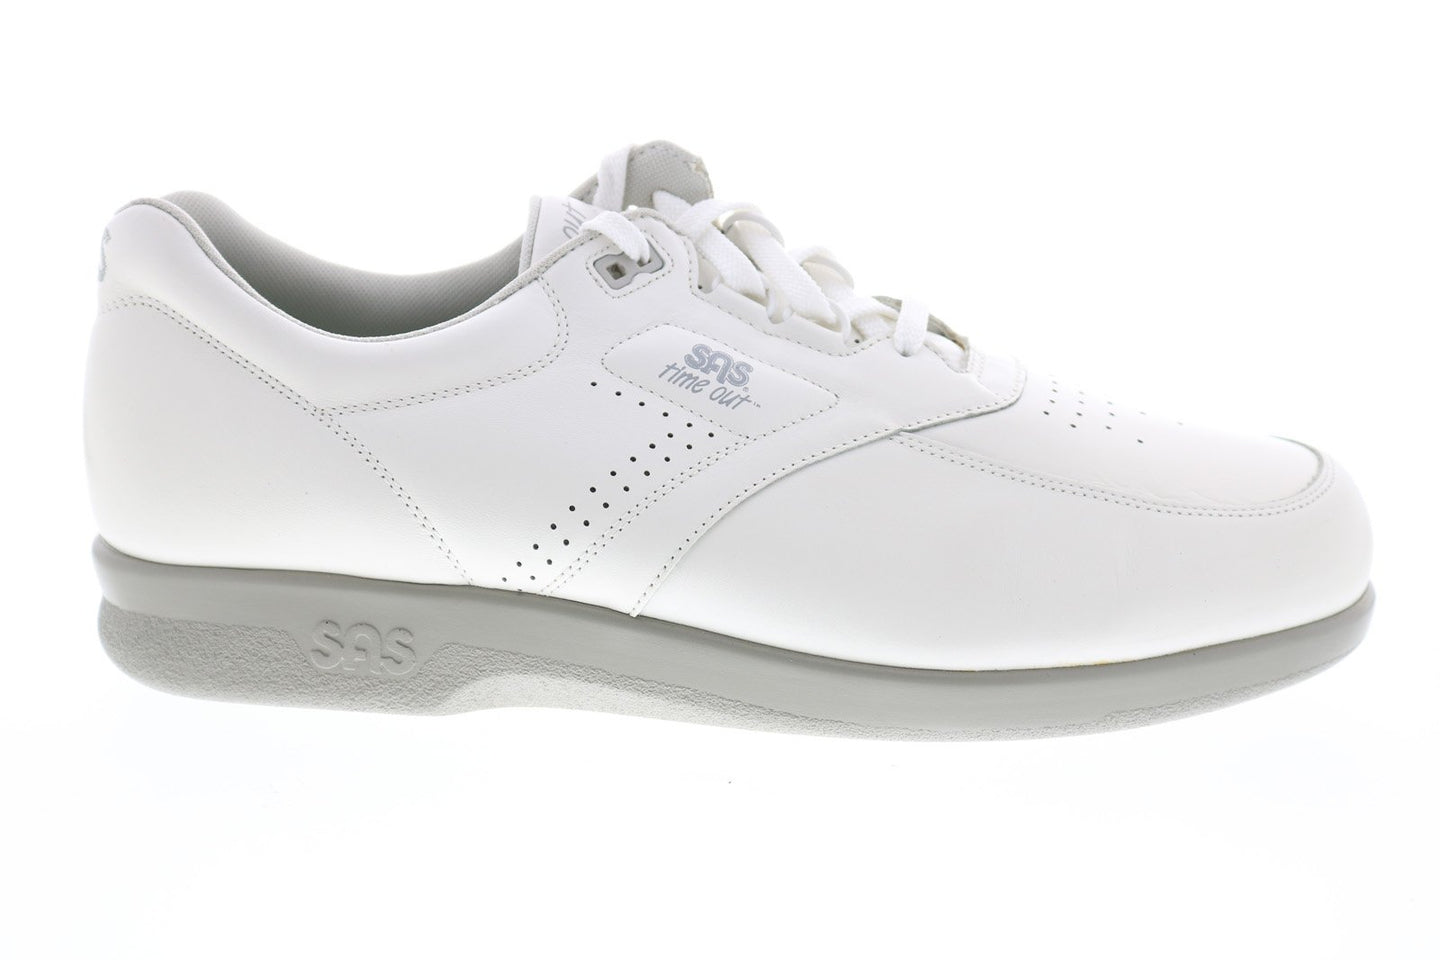 SAS Time Out 0092-001 Mens White Extra Narrow Lifestyle Sneakers Shoes ...